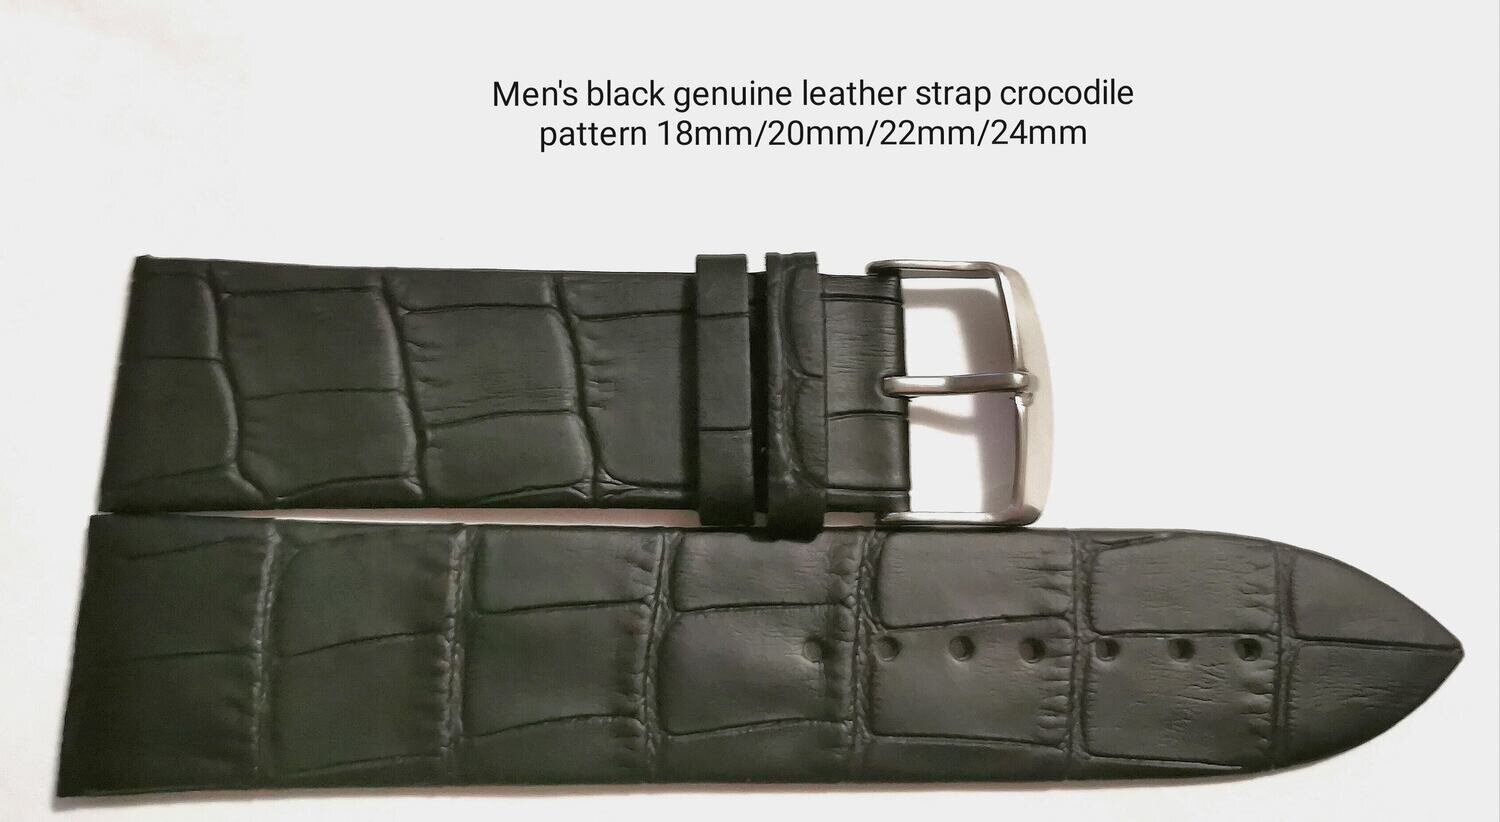 Men's black genuine leather crocodile pattern strap 18mm/20mm/22mm/24mm